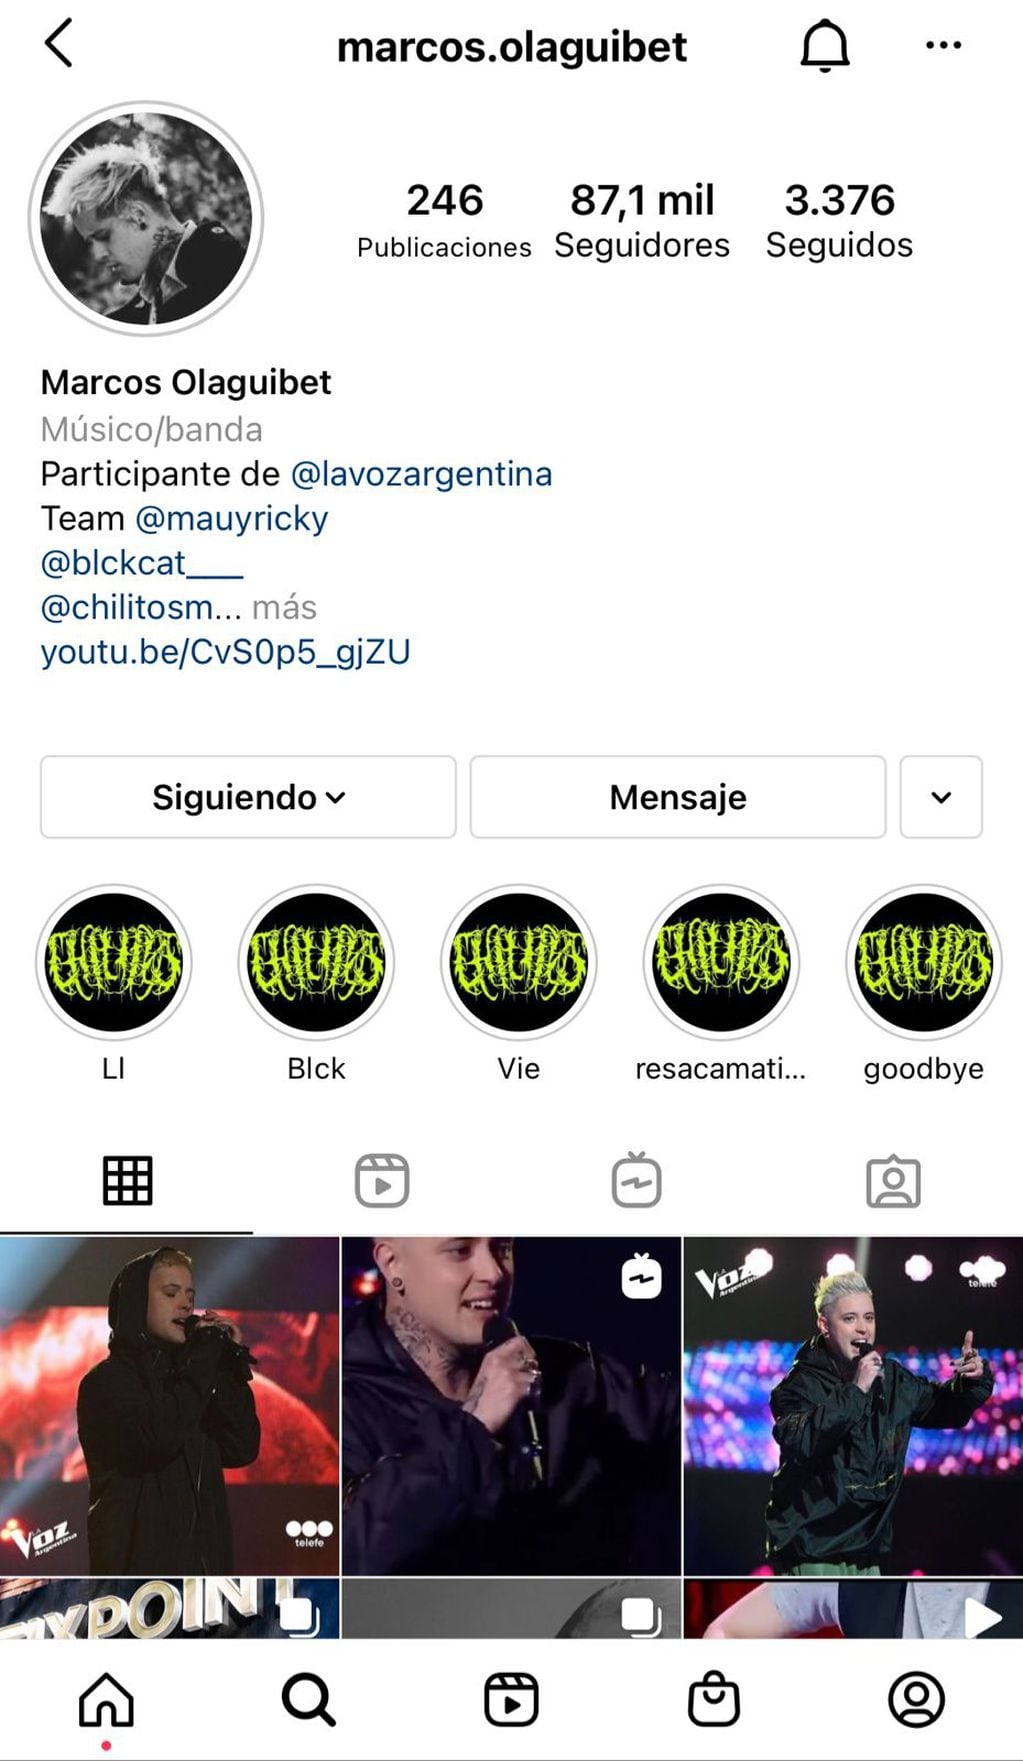 El Instagram de Marcos Olaguibet.